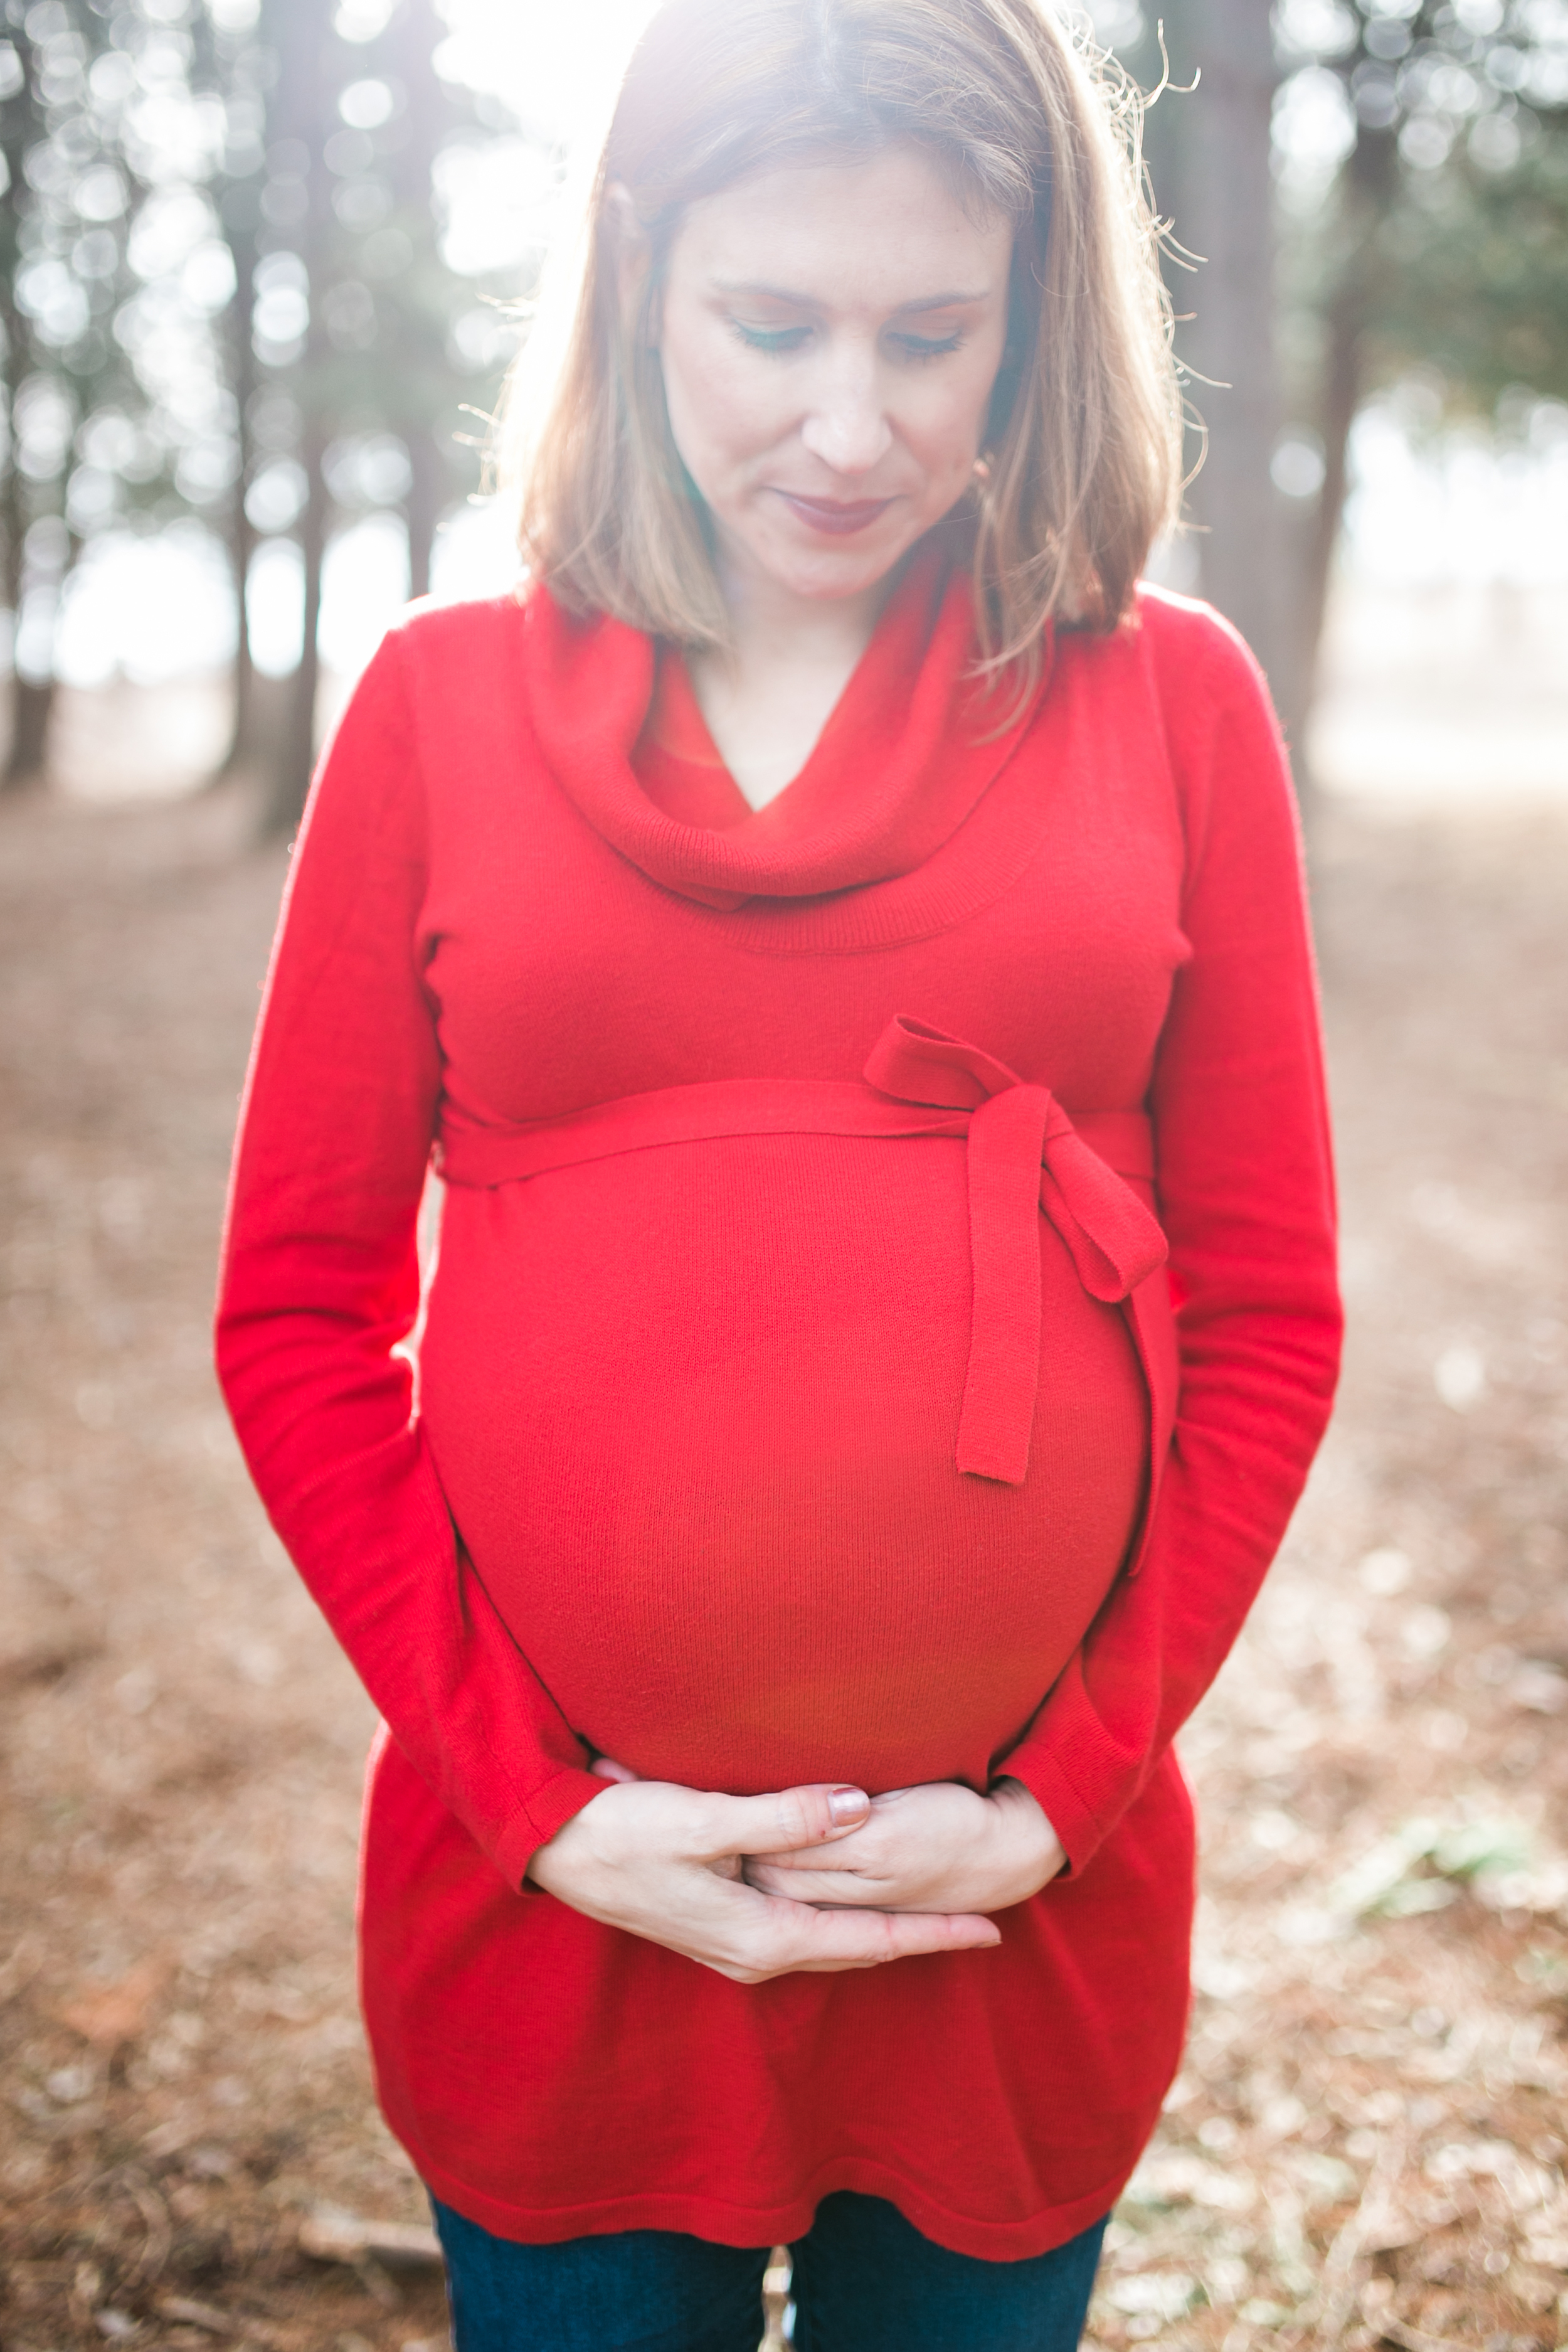 vanessa wyler pewaukee maternity newborn photography